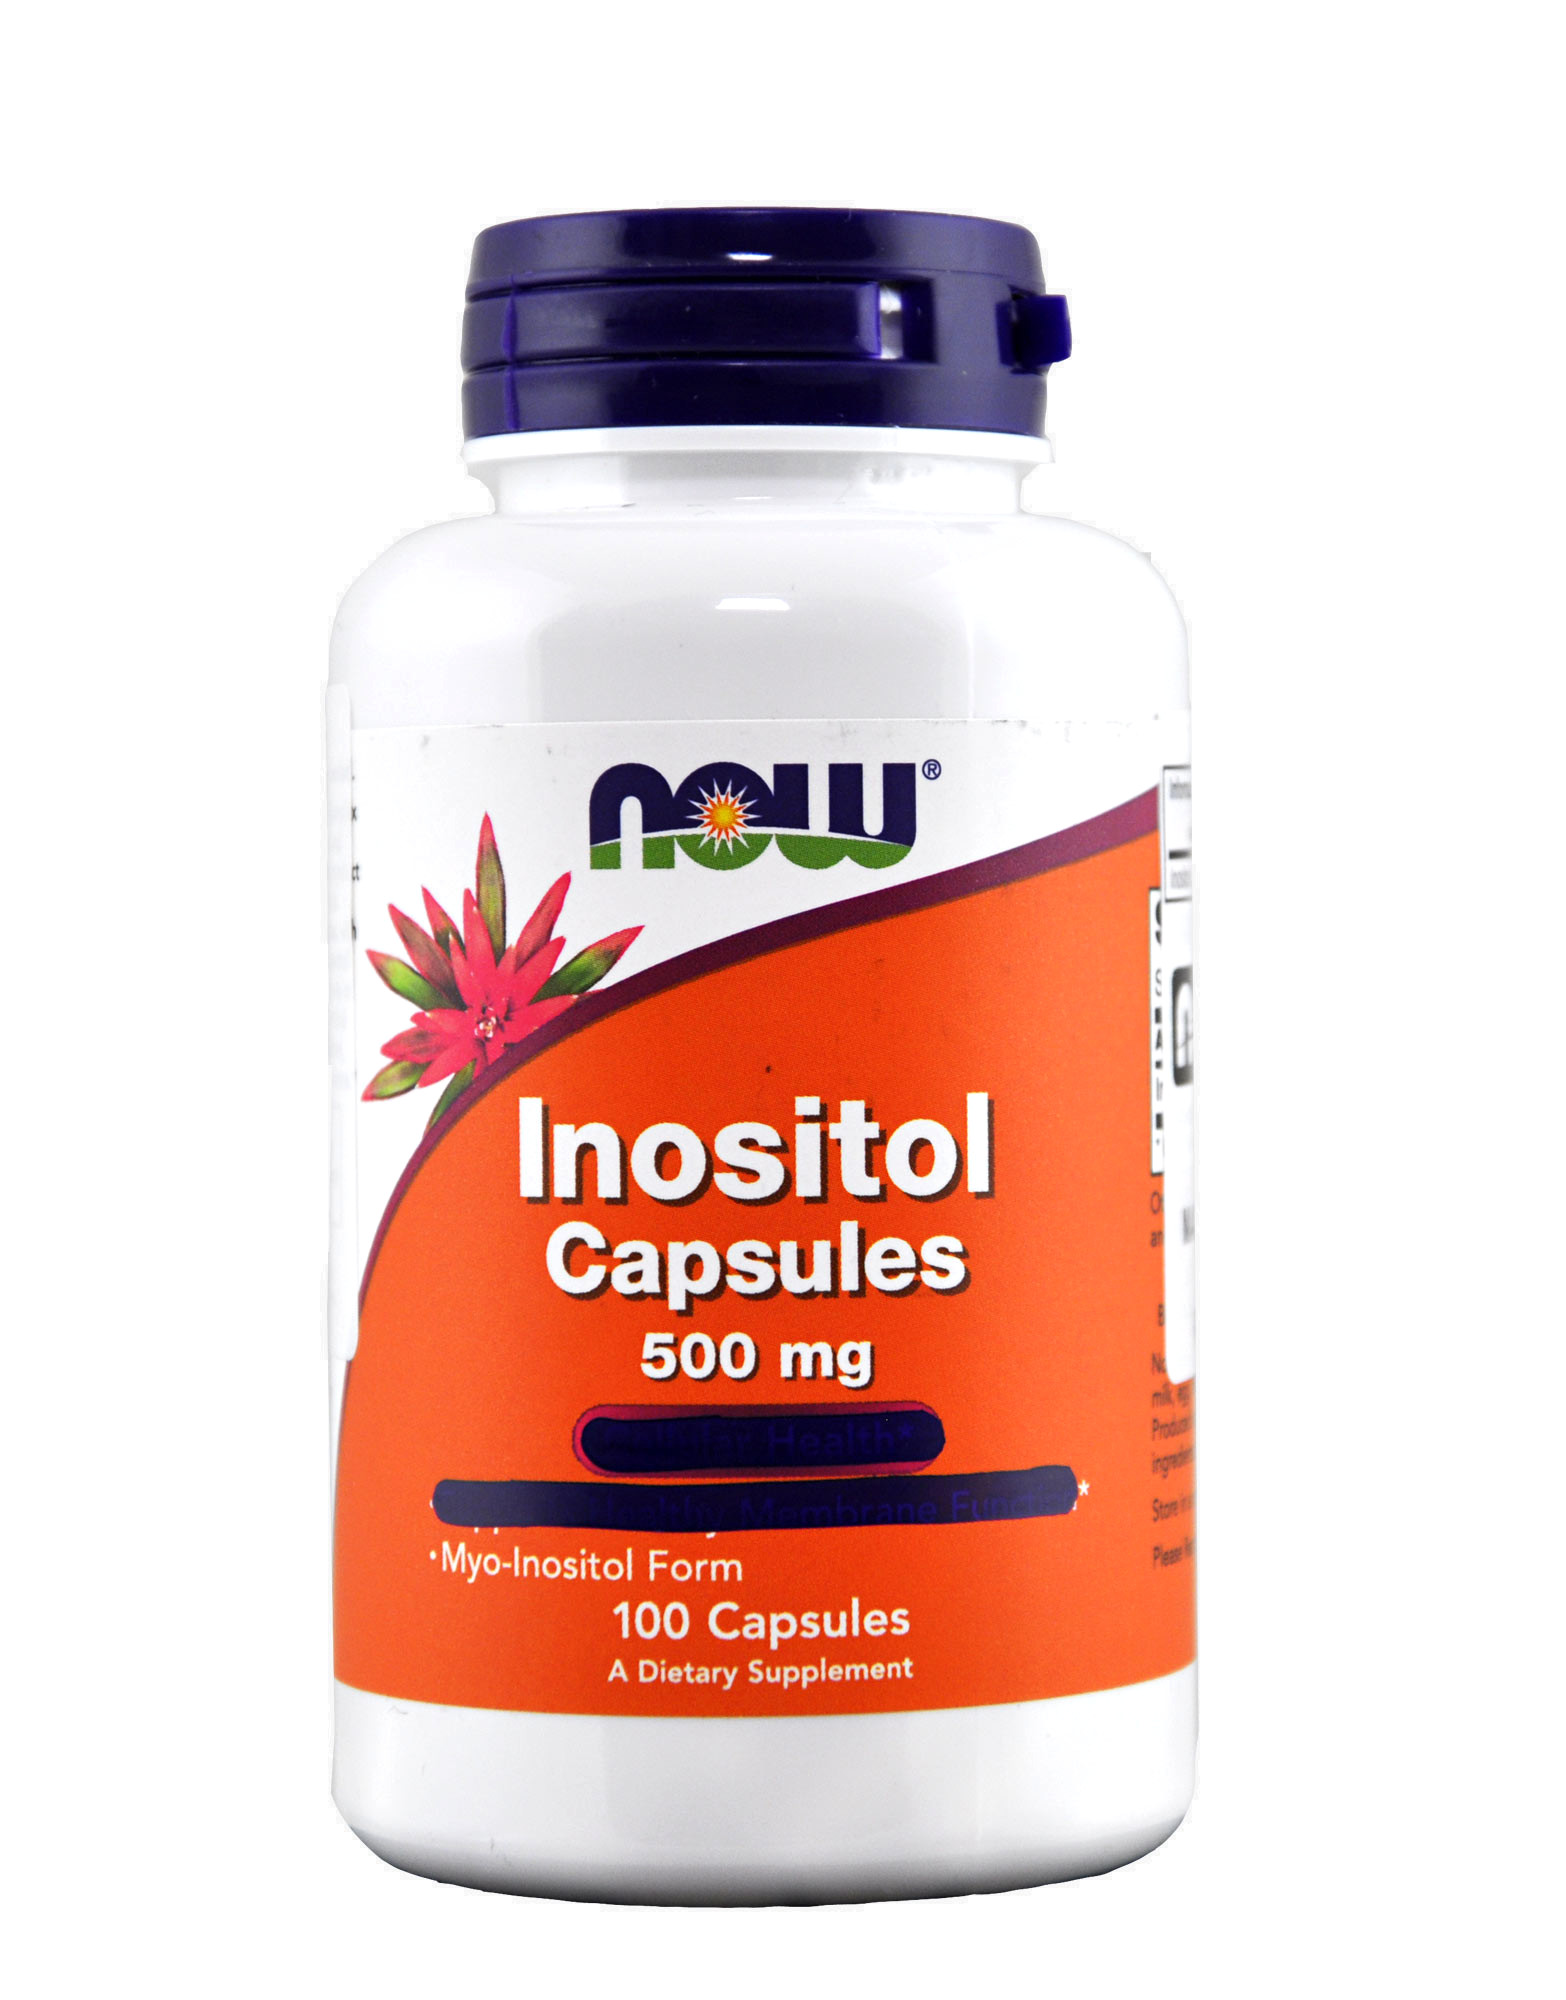 Инозитол таблетки инструкция по применению цена. Мио инозитол Now. Инозитол Now foods. Инозитол капсулы. Инозит препарат.